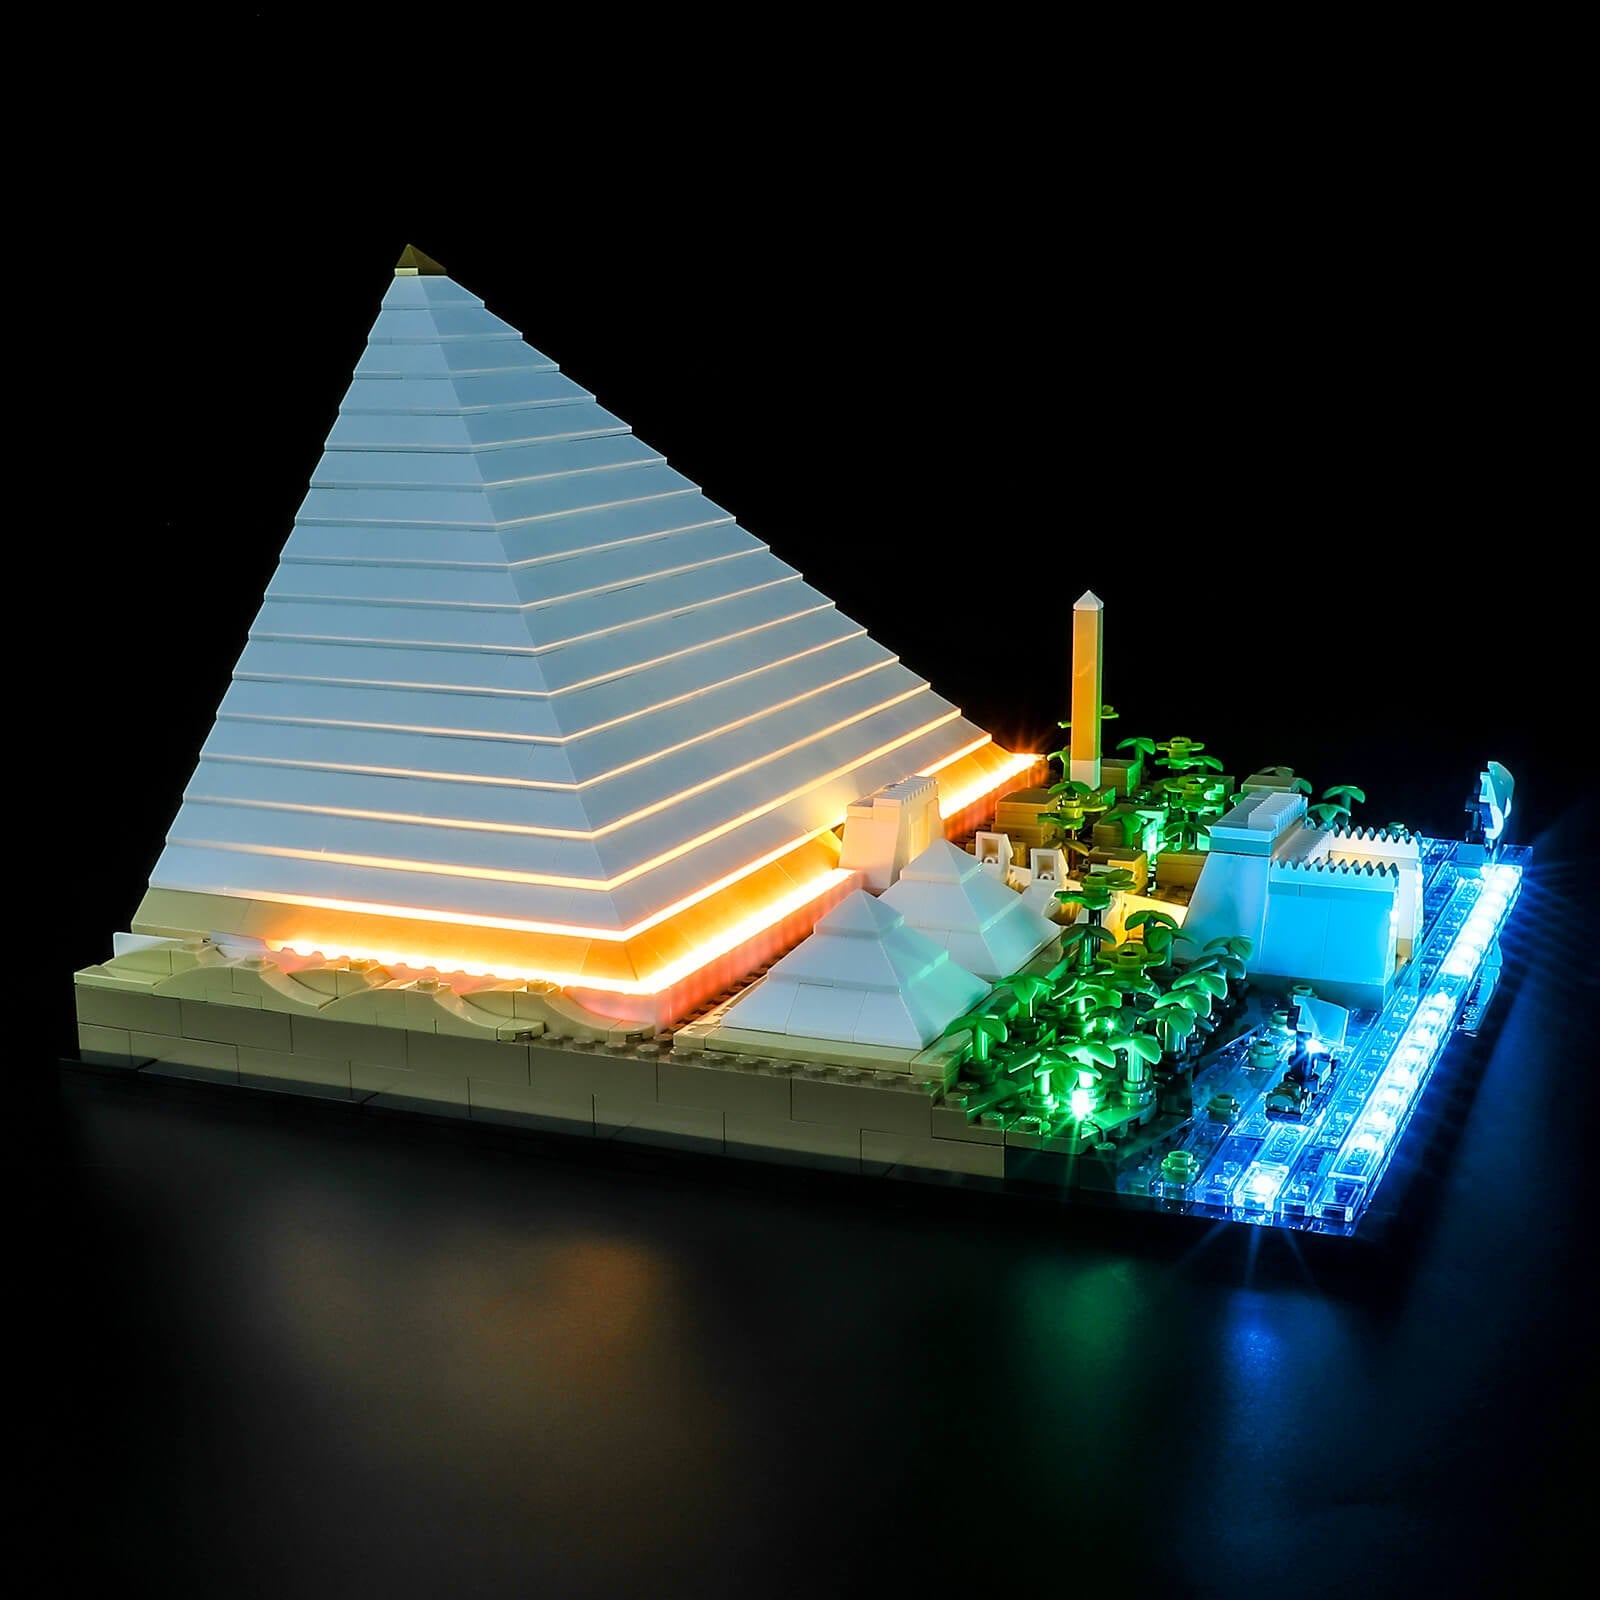 LEGO Great Pyramid of Giza 21058 Light Kit